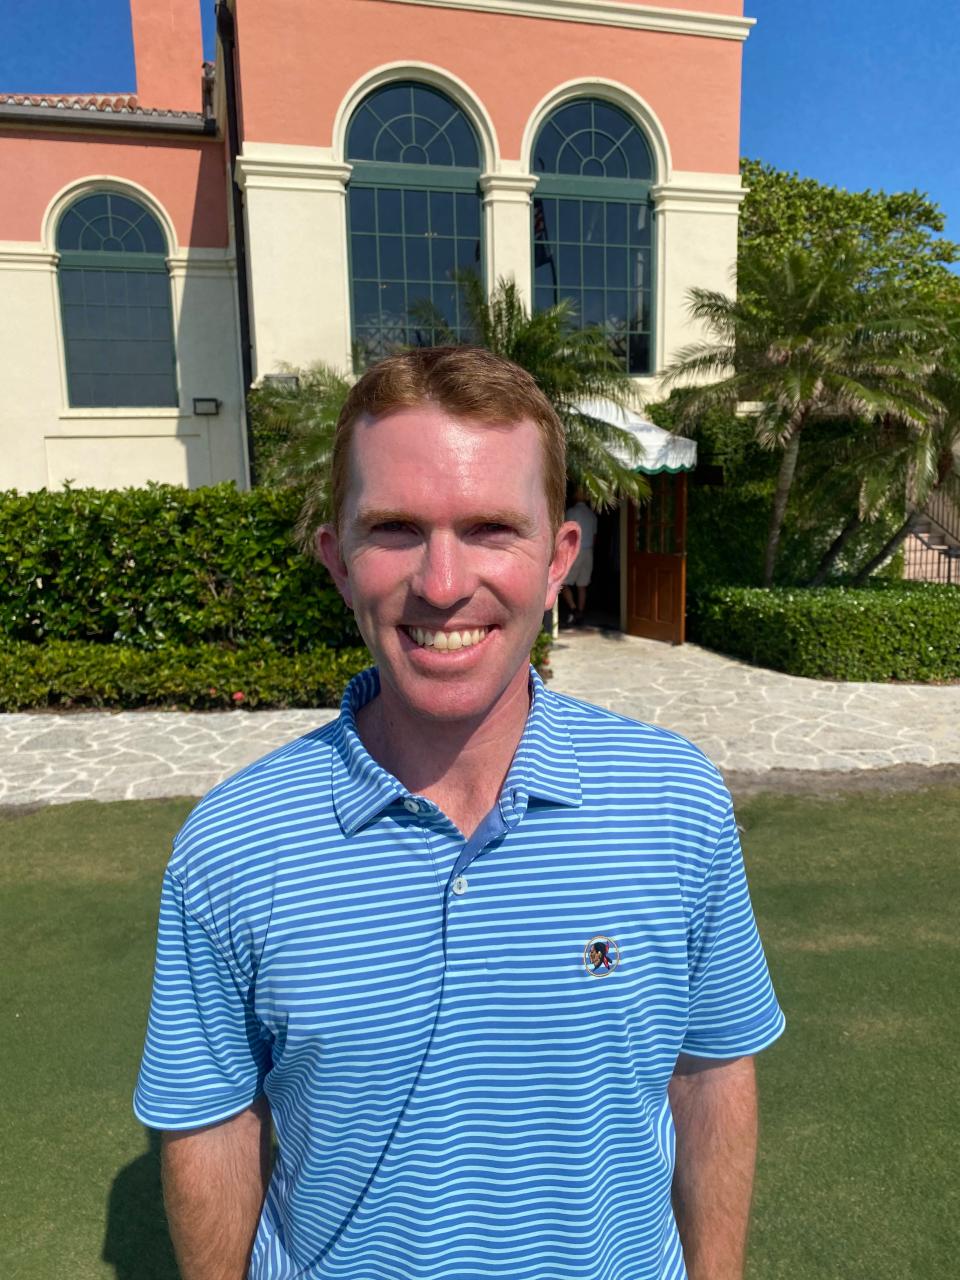 Matt Cahill, the Head PGA Professional at Seminole Golf Club in Juno Beach, qualified for this week's PGA Championship.